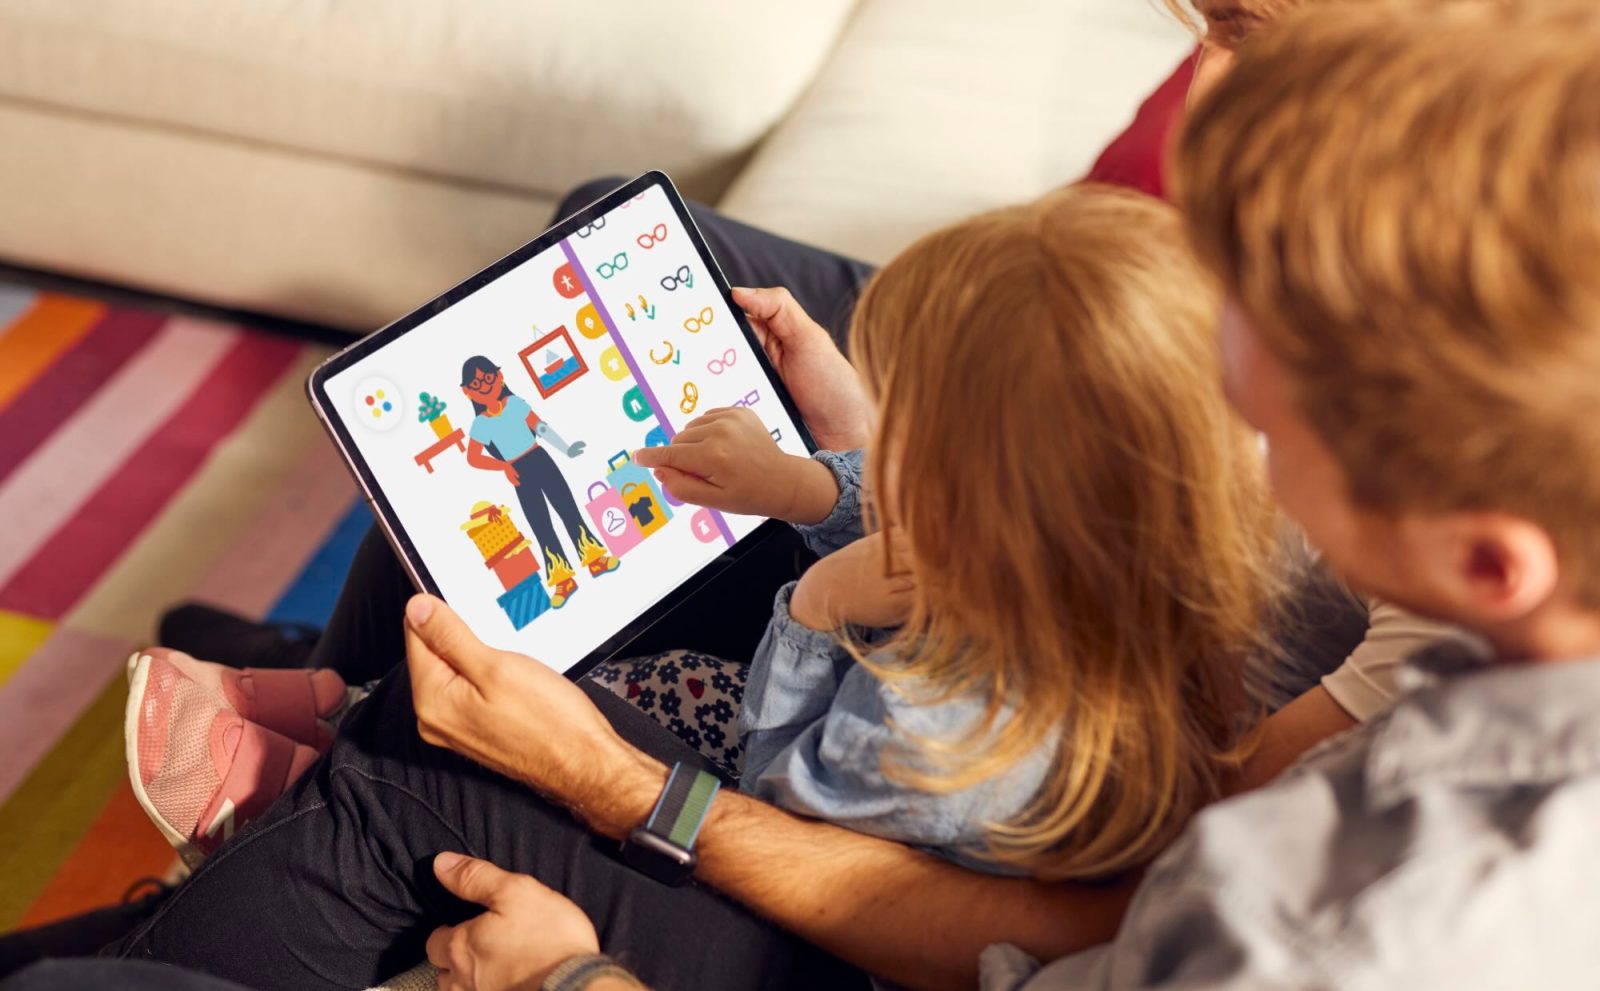 Pok Pok Montessori-inspired iOS app gets 'Dress-Up' toy in latest